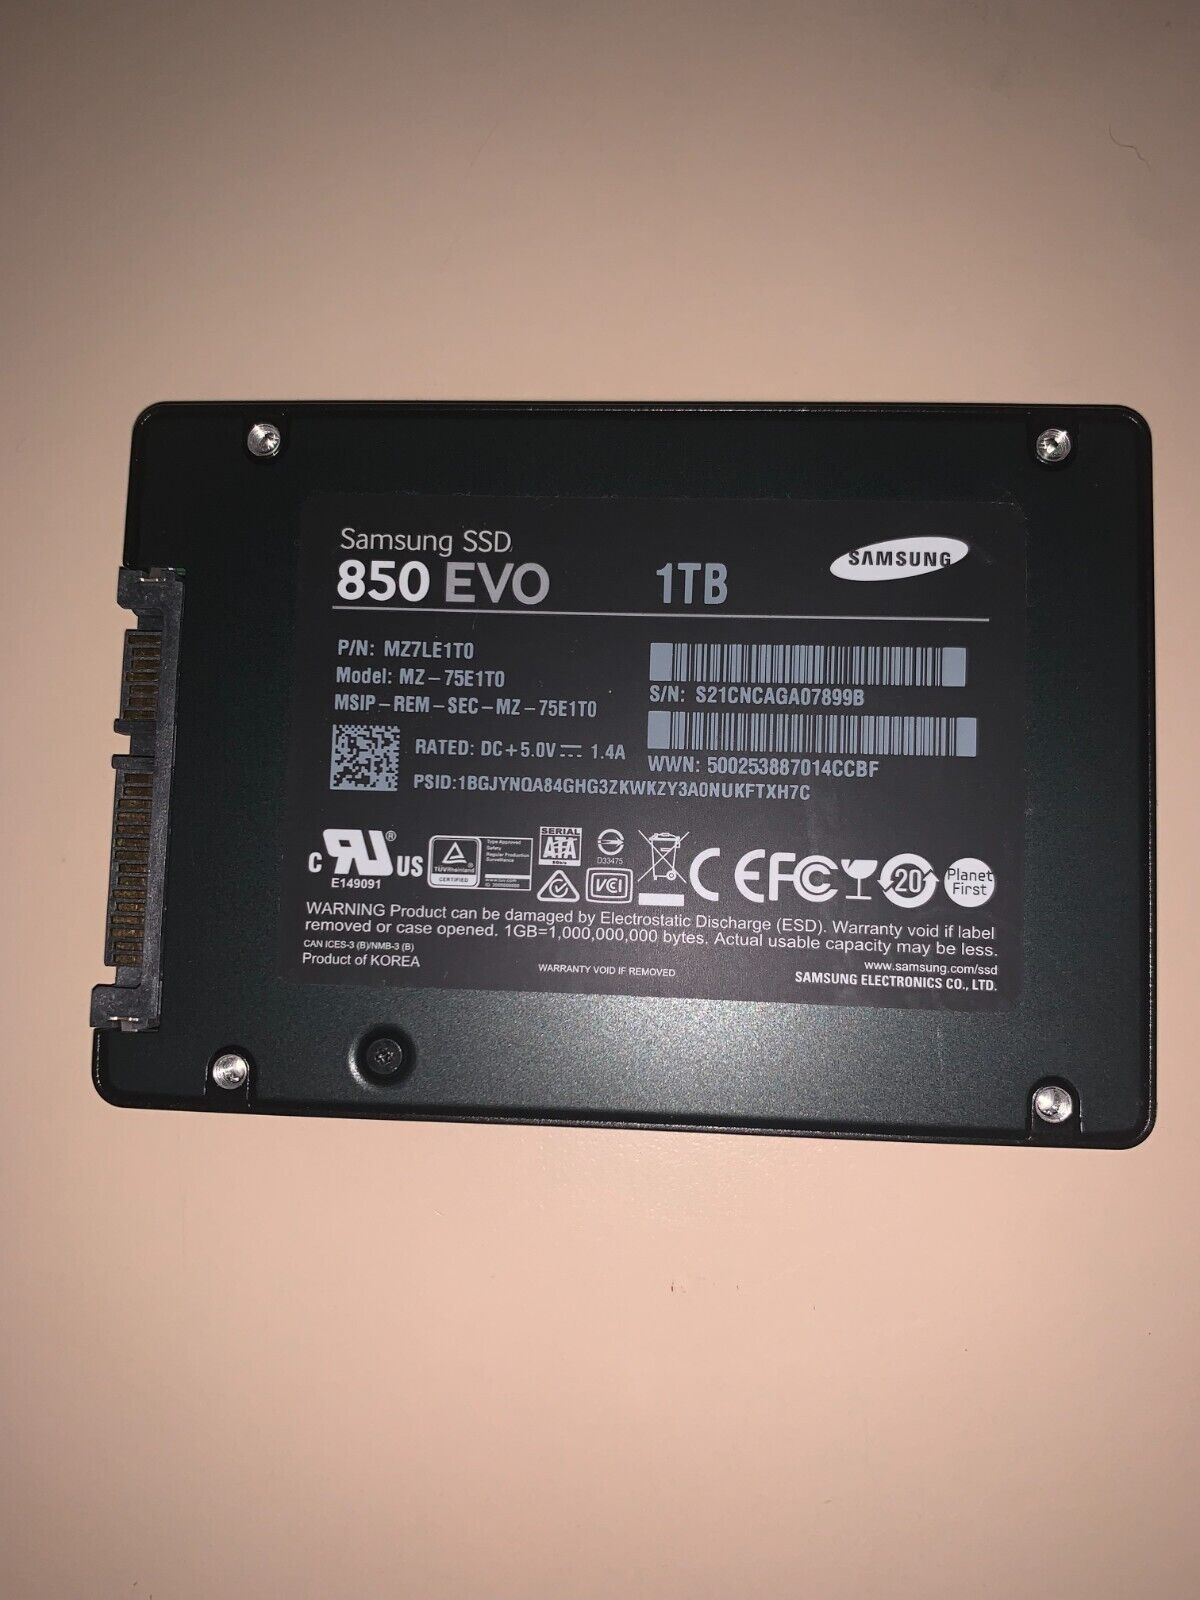 Samsung SSD 850 EVO 1 TB Internal 2.5 inch MZ-75E1T0 SATA3 Solid 100% CDI